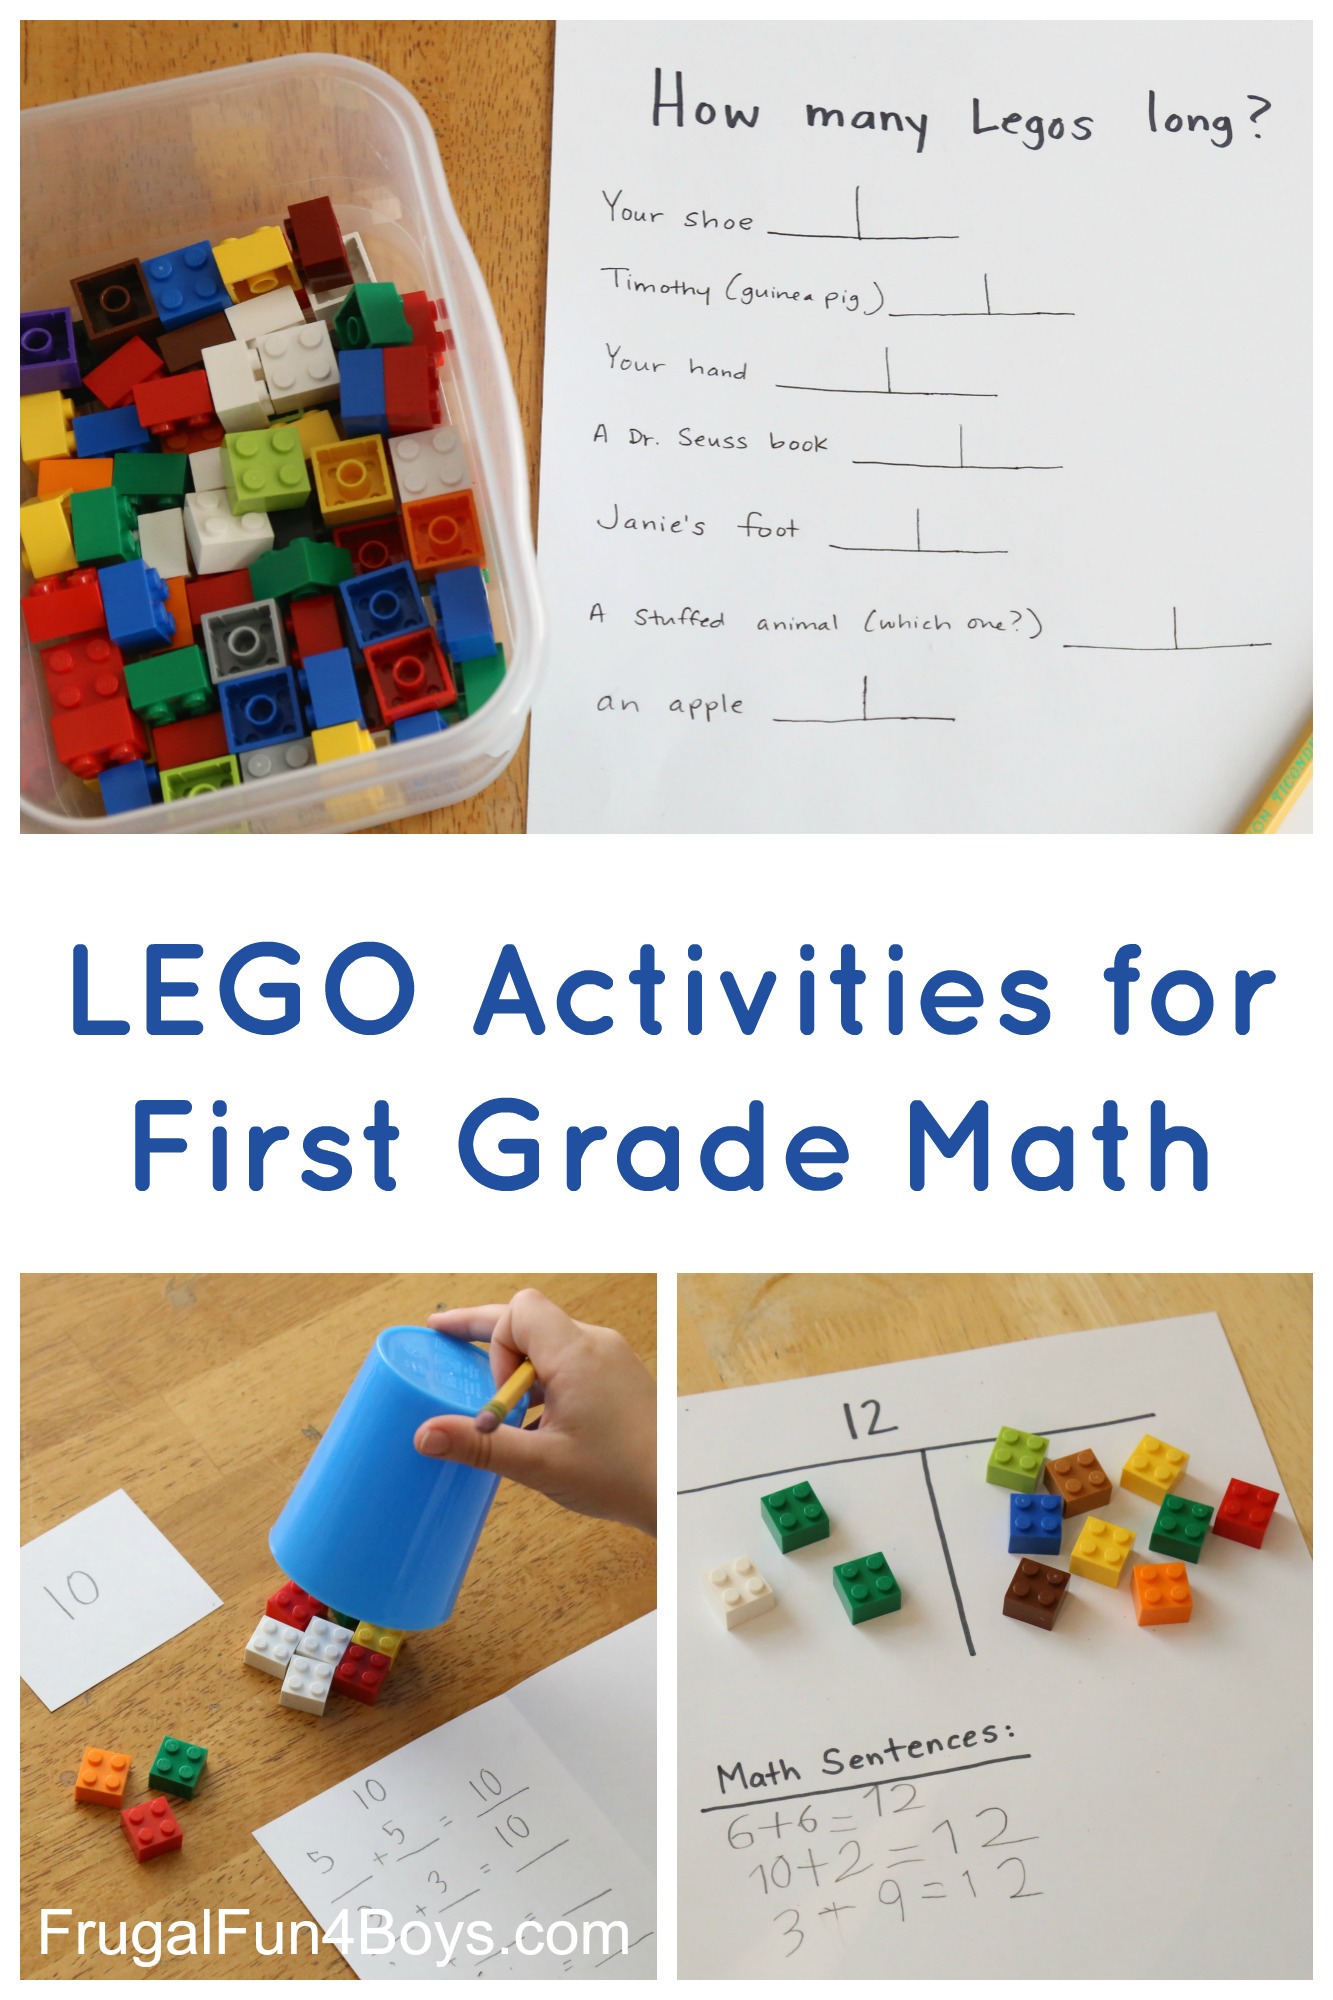 LEGO Activities for First Grade Math